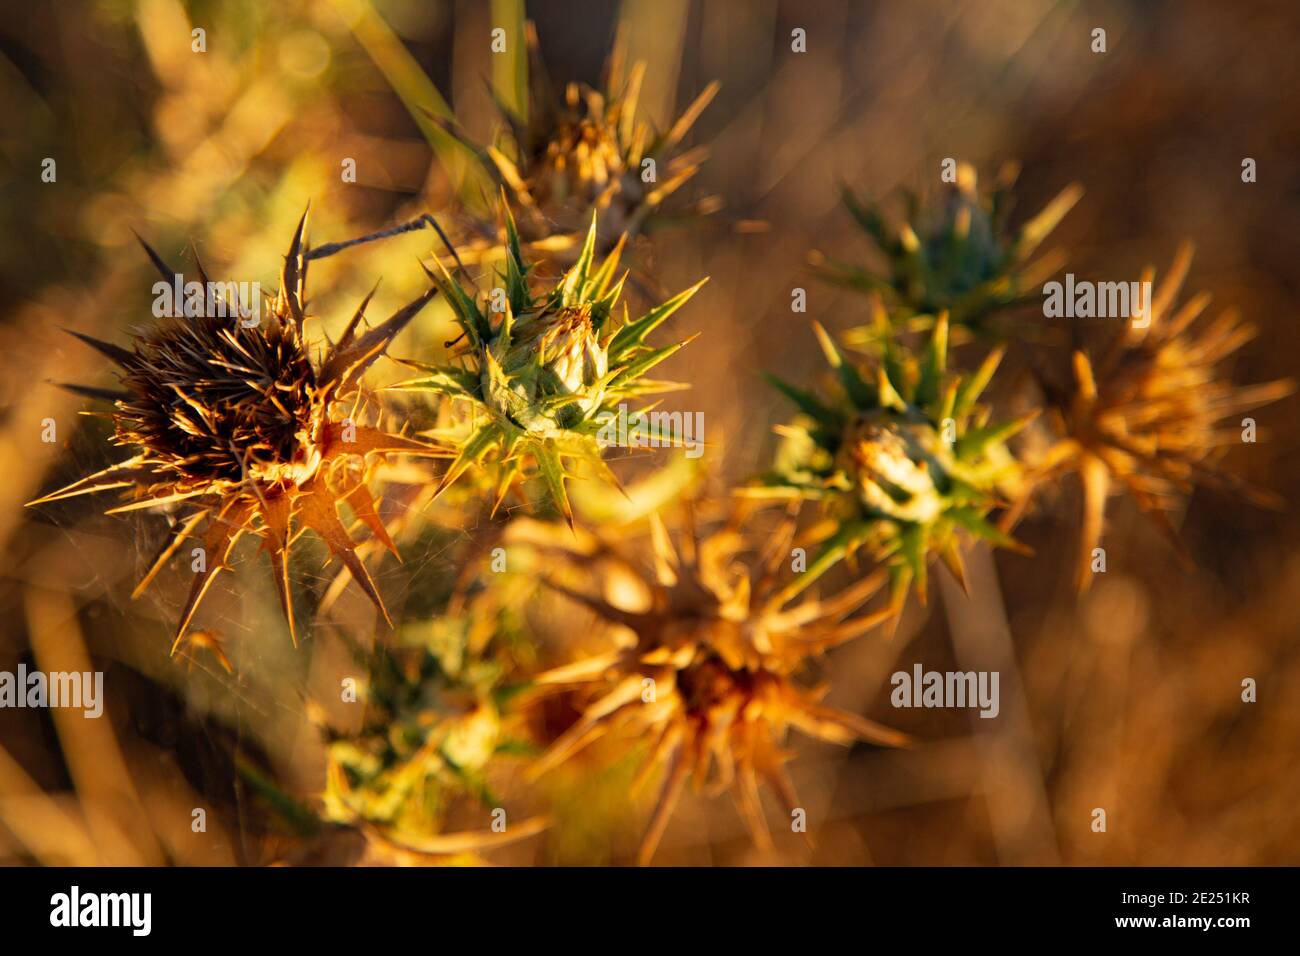 Stacheldistel mit sterbenden Blütenköpfen. Stockfoto